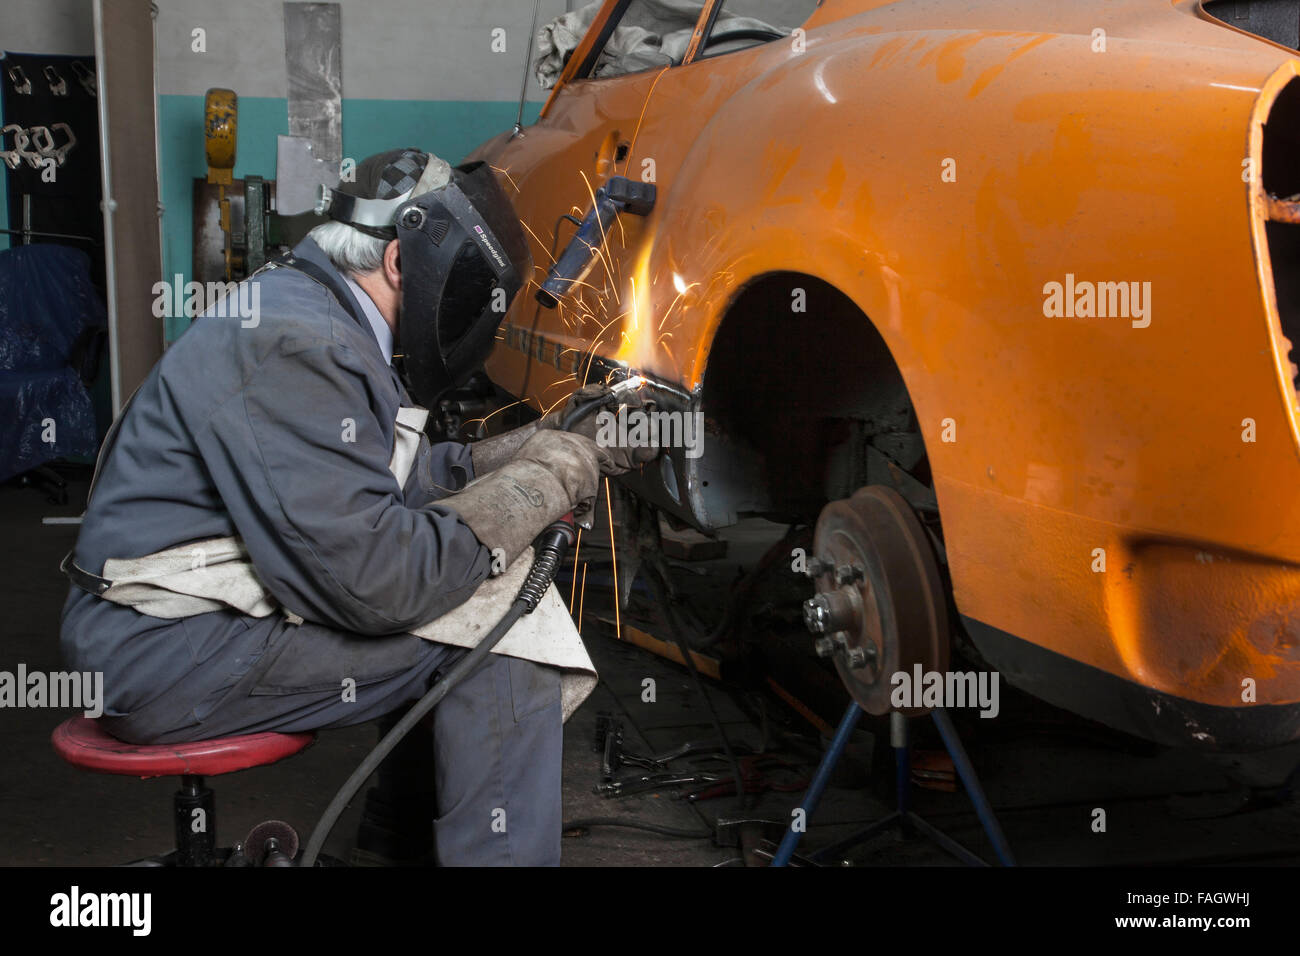 Coachbuilder restores an classic car VW Karmann Ghia. Welding work at the bodywork of the vehicle. Stock Photo